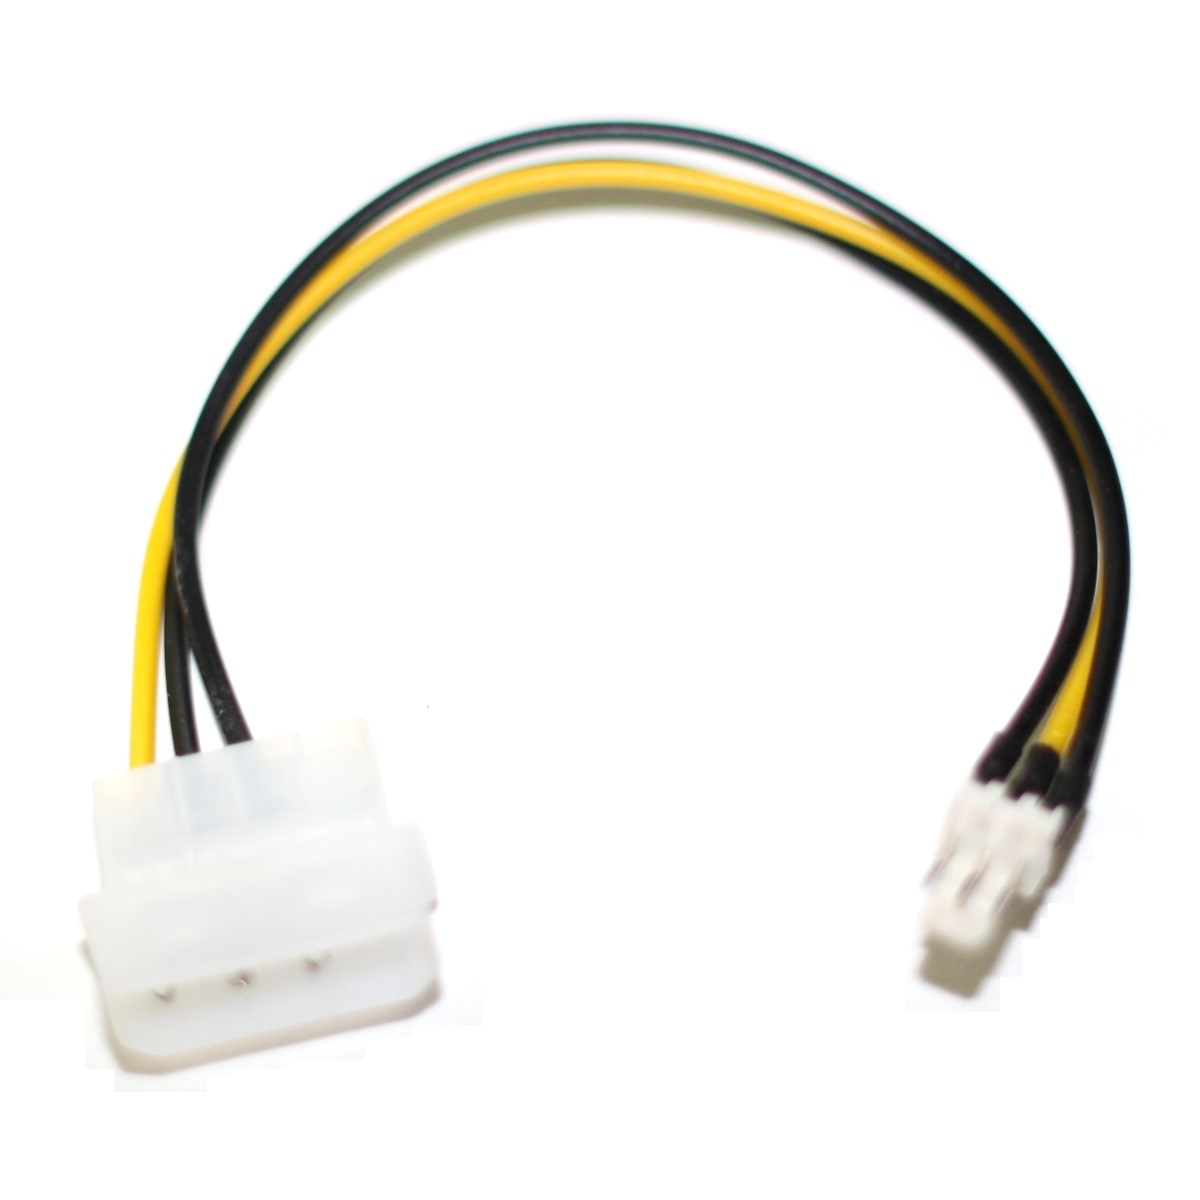 atx 4 pin molex connector